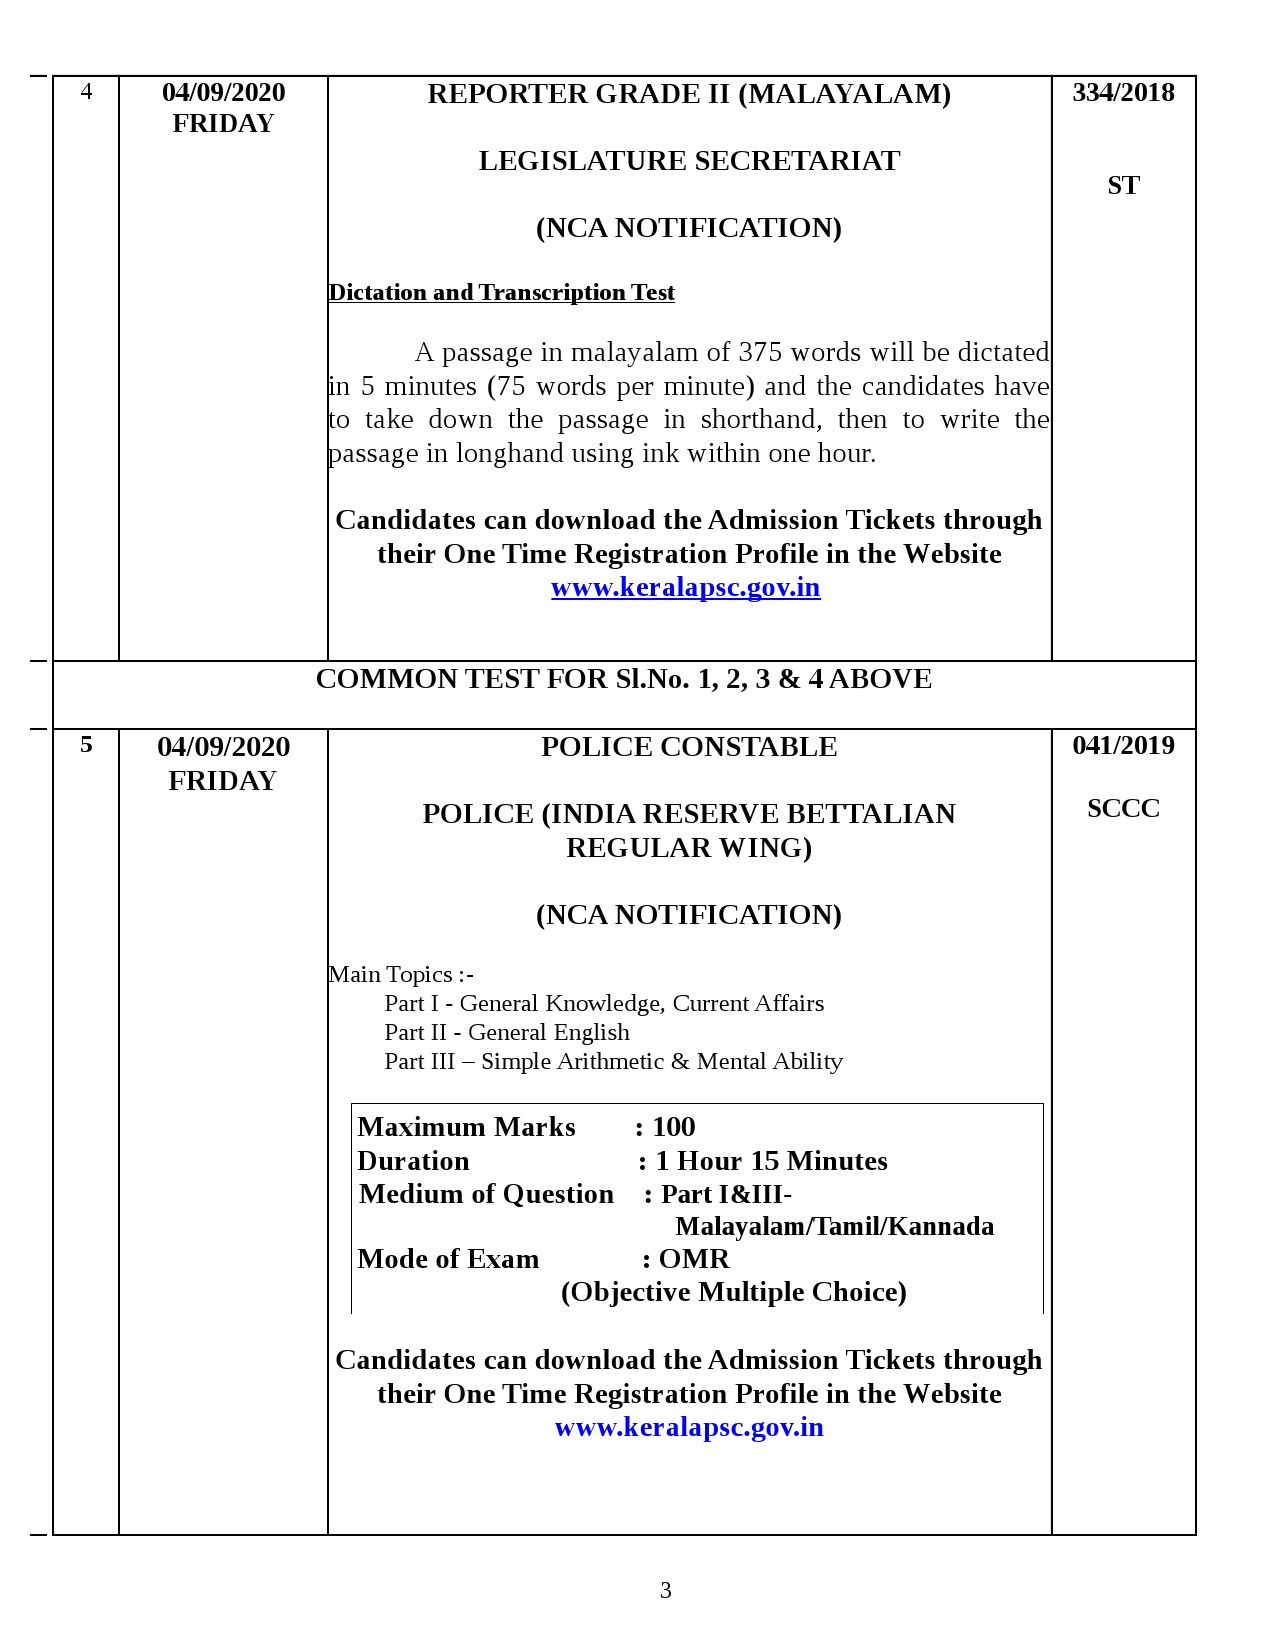 Kerala PSC Exam Calendar September 2020 - Notification Image 3